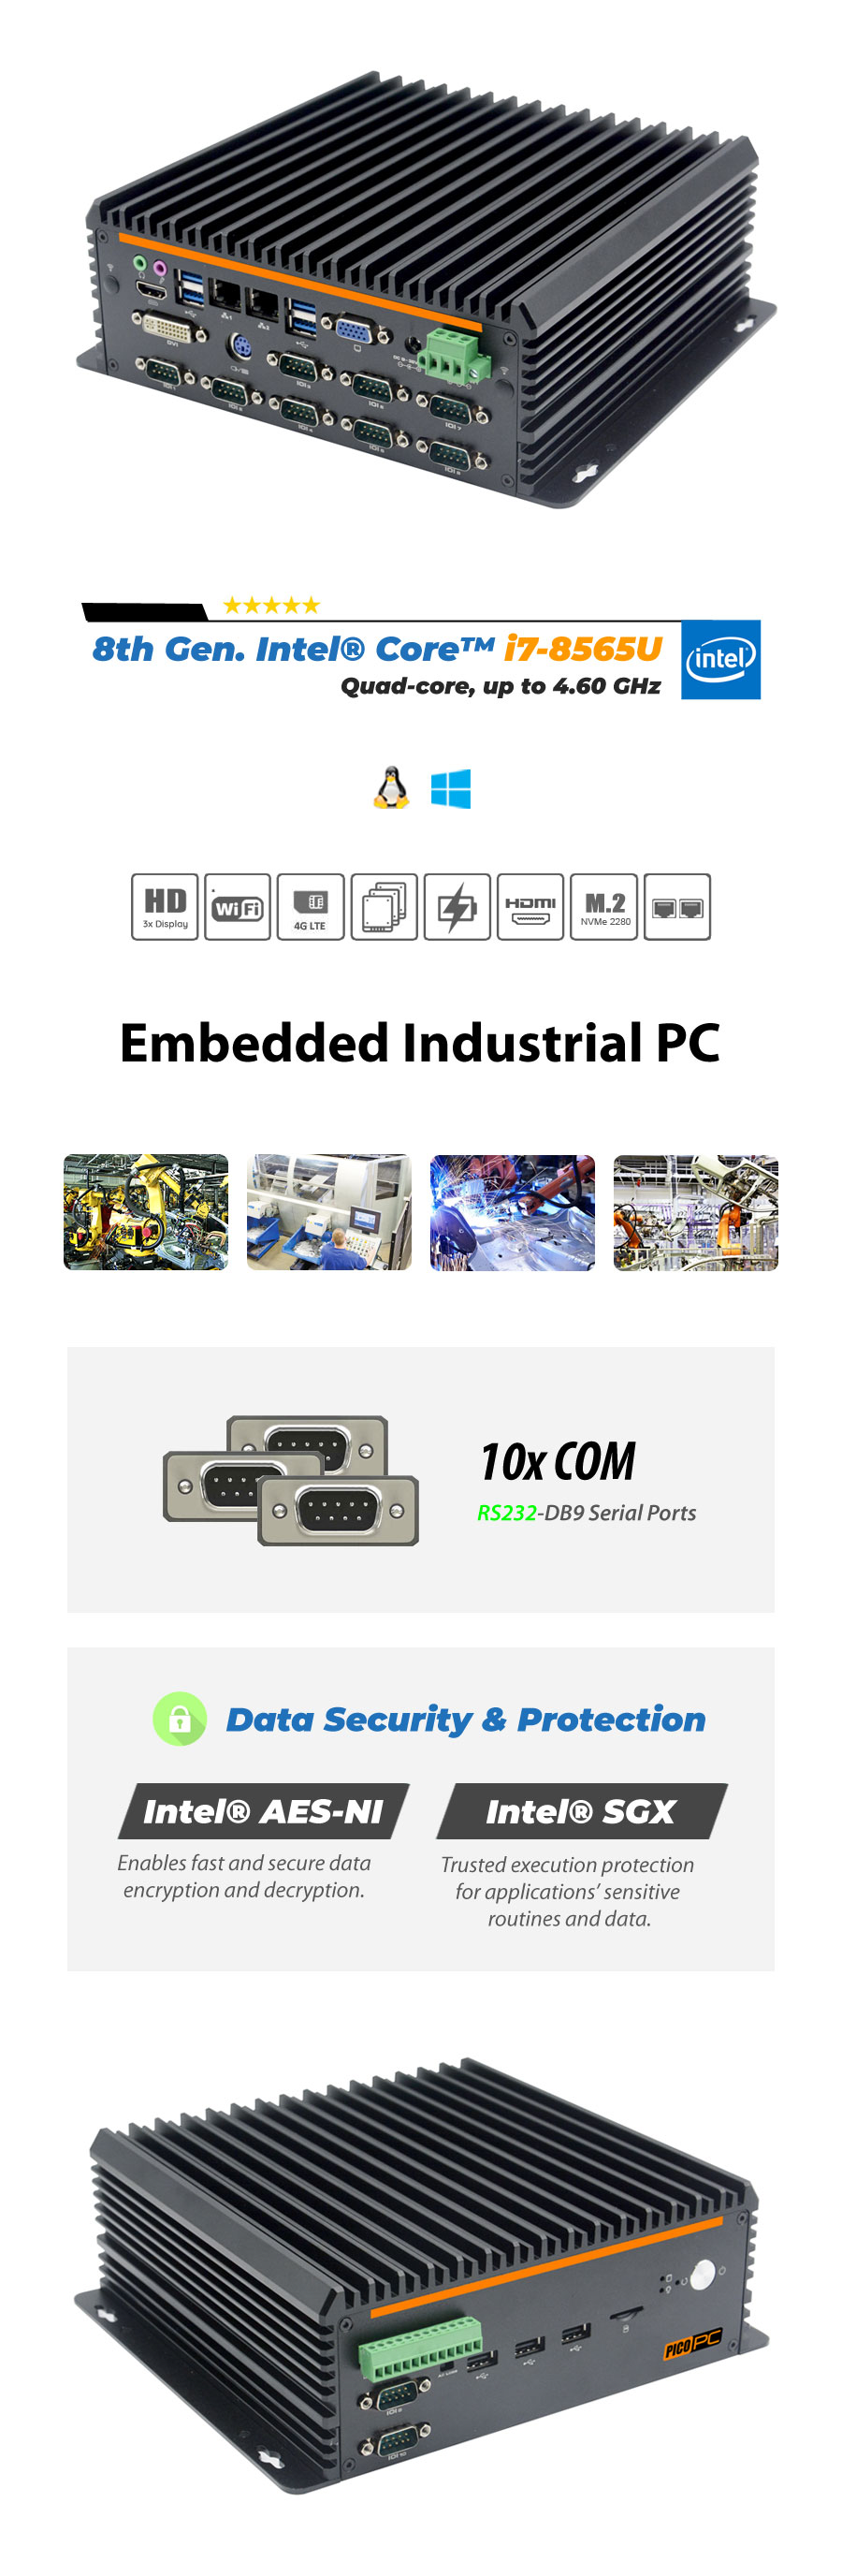 8th Gen. Intel® i7-8565U 10 COM Fanless Industrial Mini PC - MNHO-082 | Image